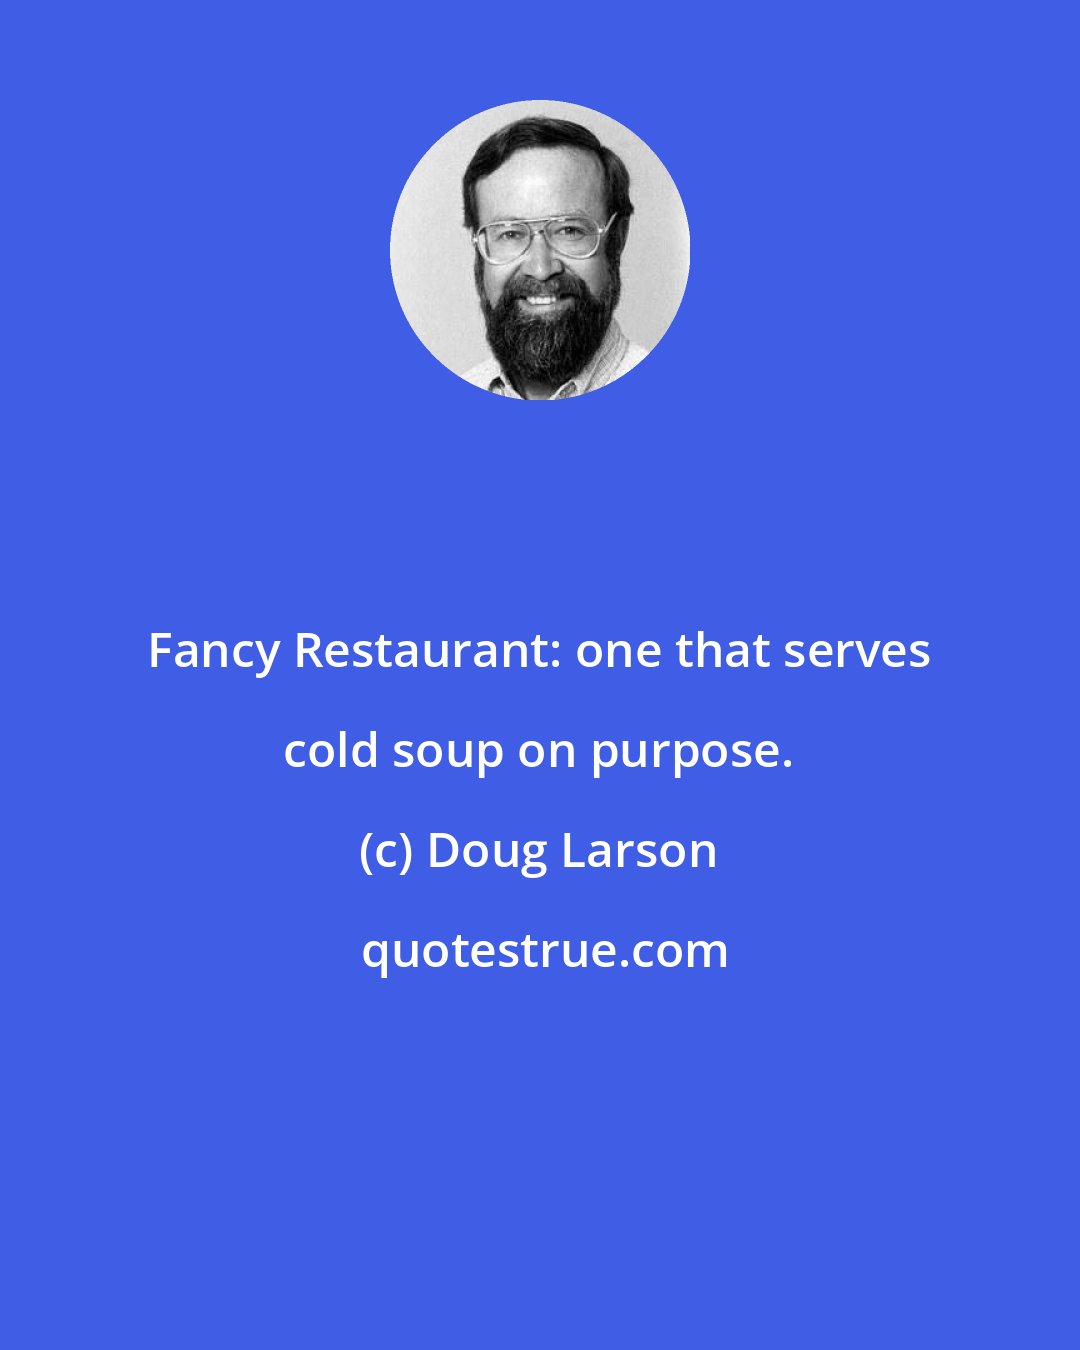 Doug Larson: Fancy Restaurant: one that serves cold soup on purpose.